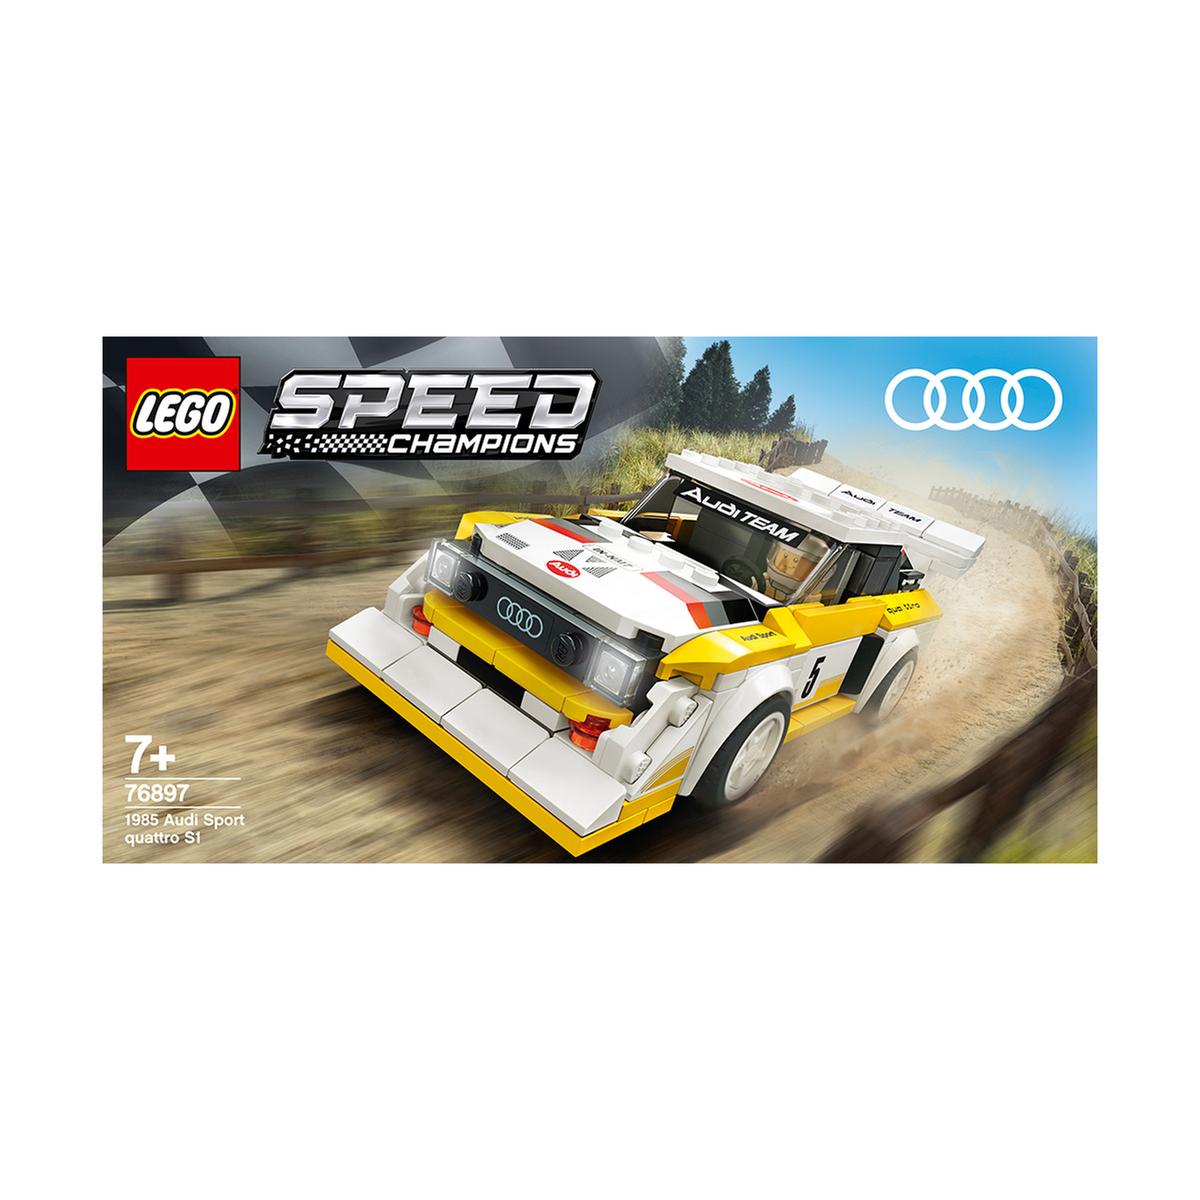 LEGO Speed Champions - 1985 Audi Sport quattro S1 76897 | LEGO RACERS |  Loja de brinquedos e videojogos Online Toysrus